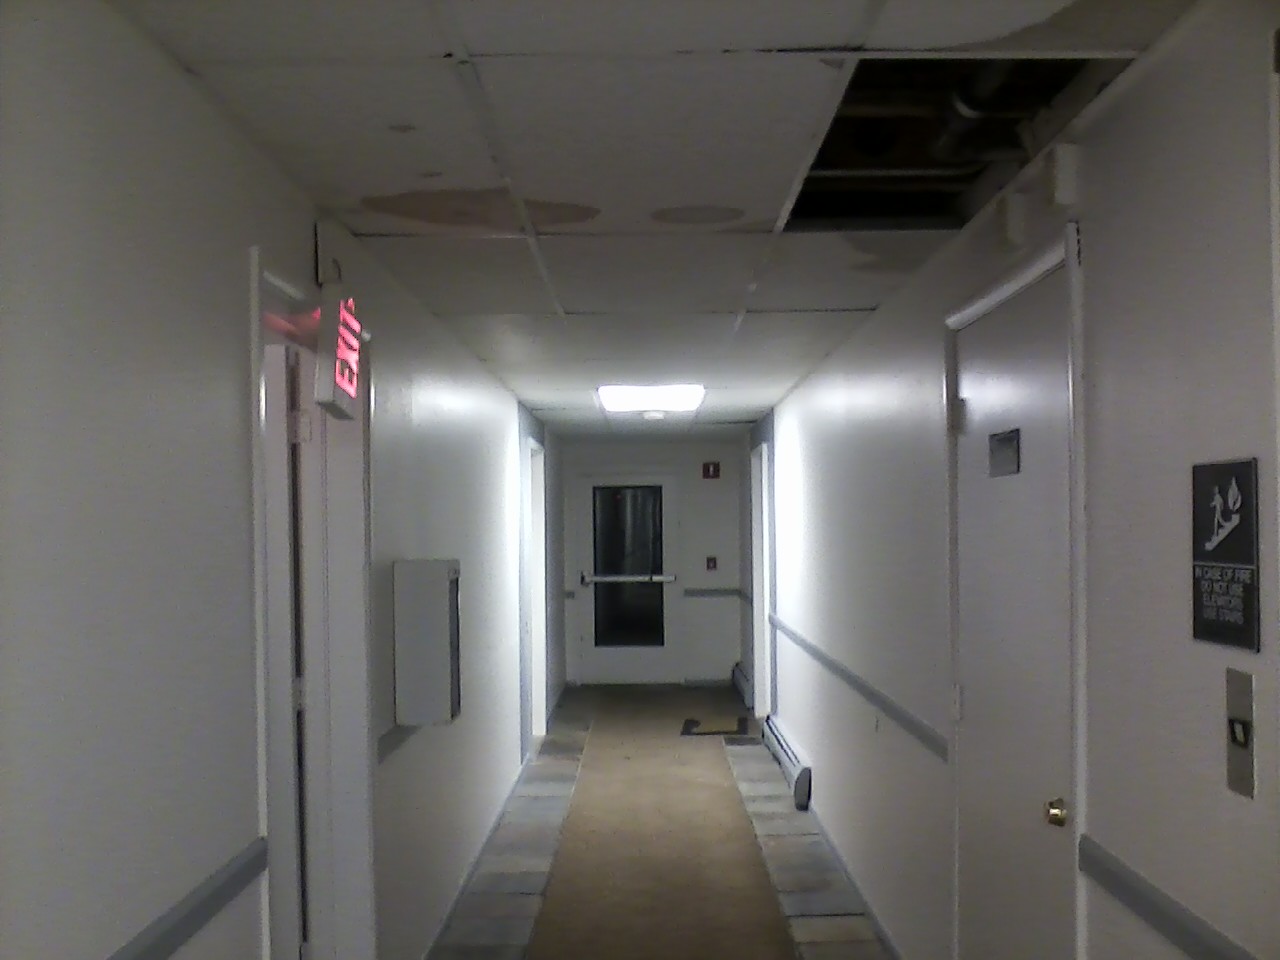 Trashed hallways.